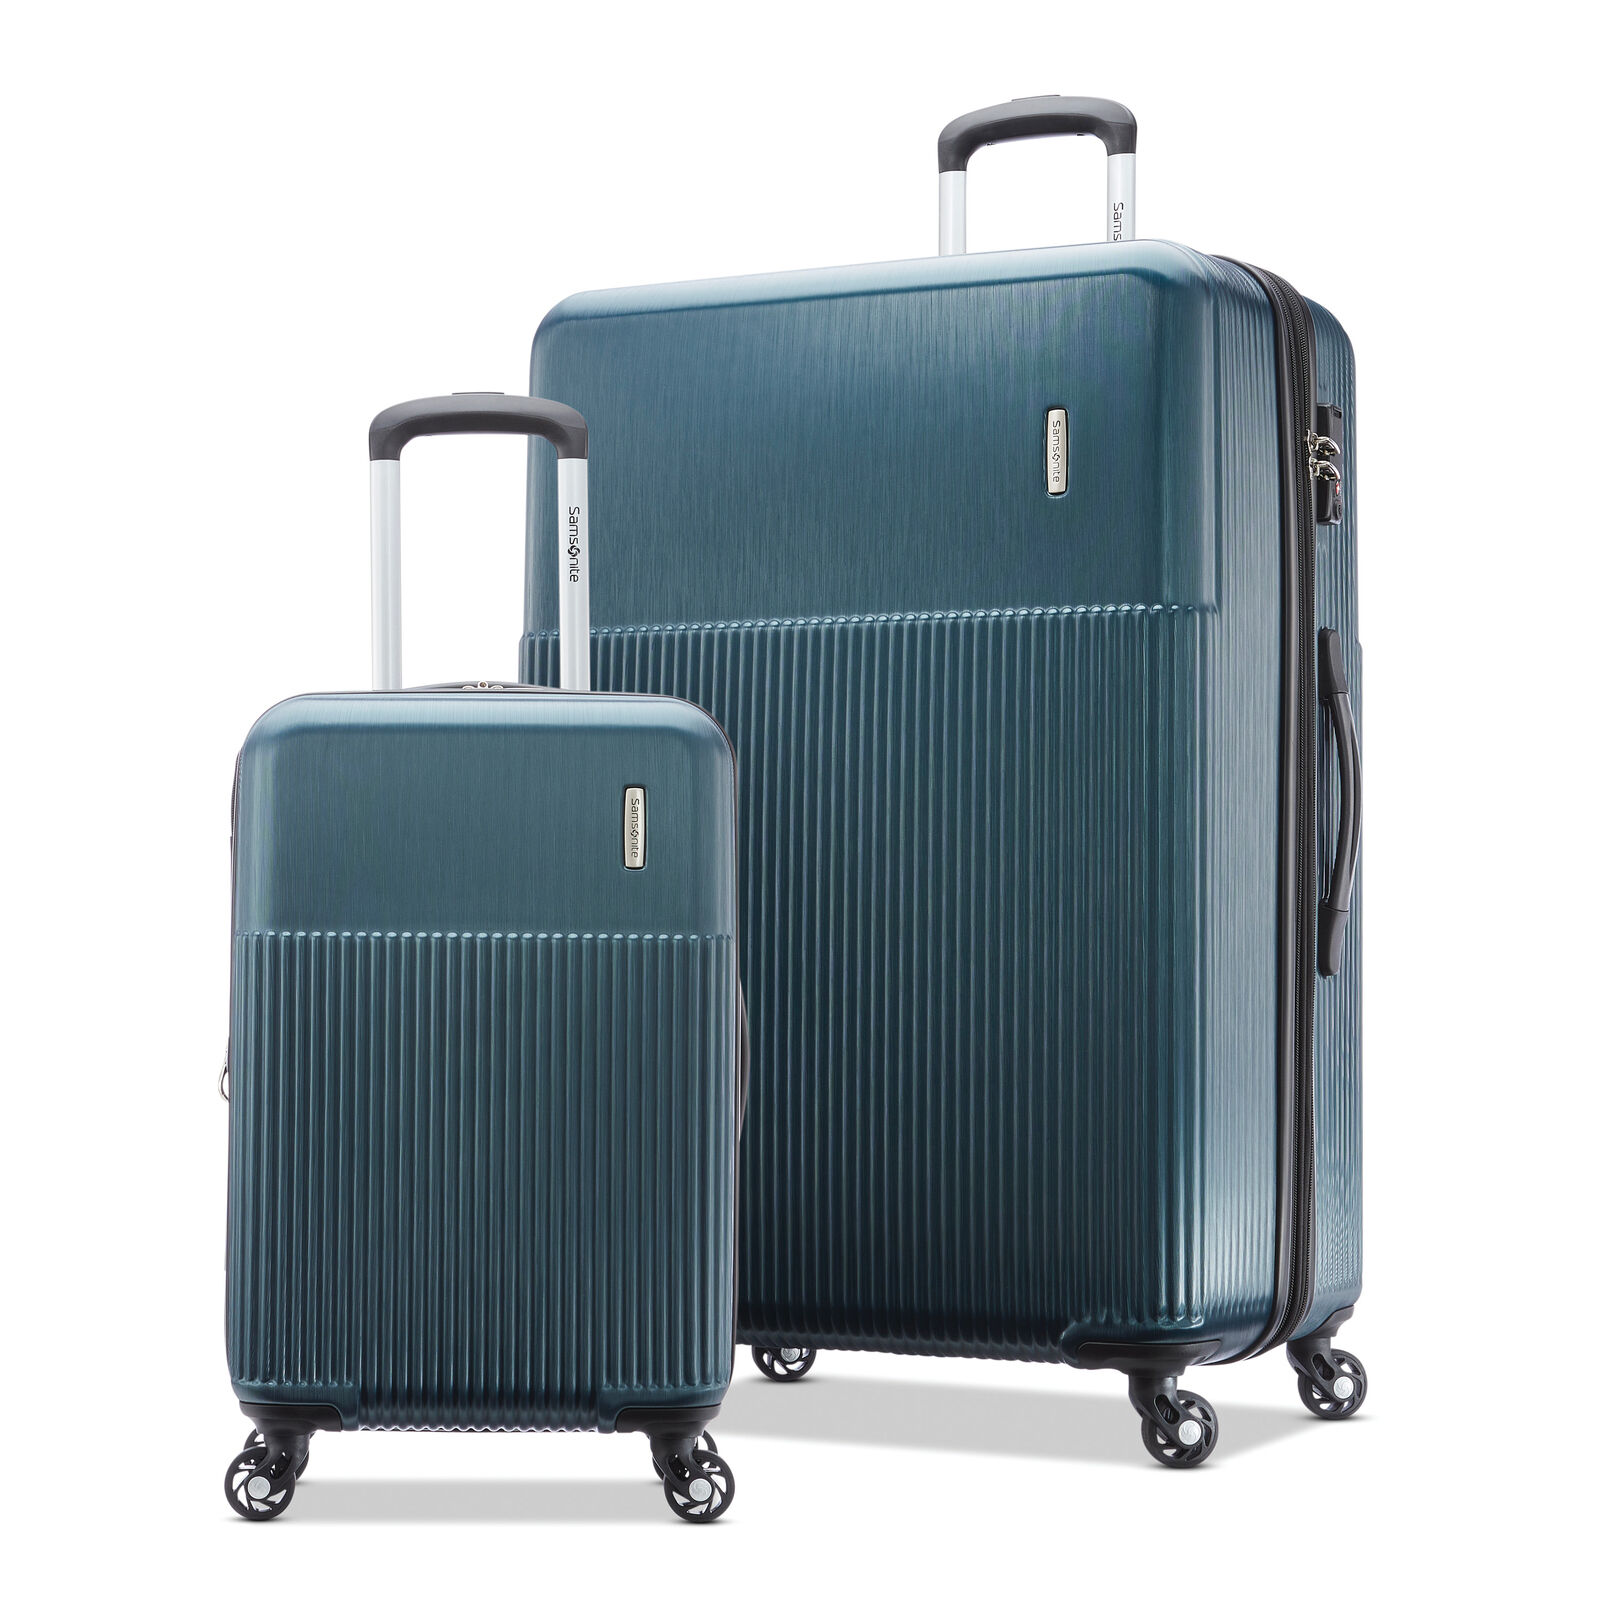 2-Piece Samsonite Azure 2 Piece Hardside Luggage Set $128 + Free Shipping